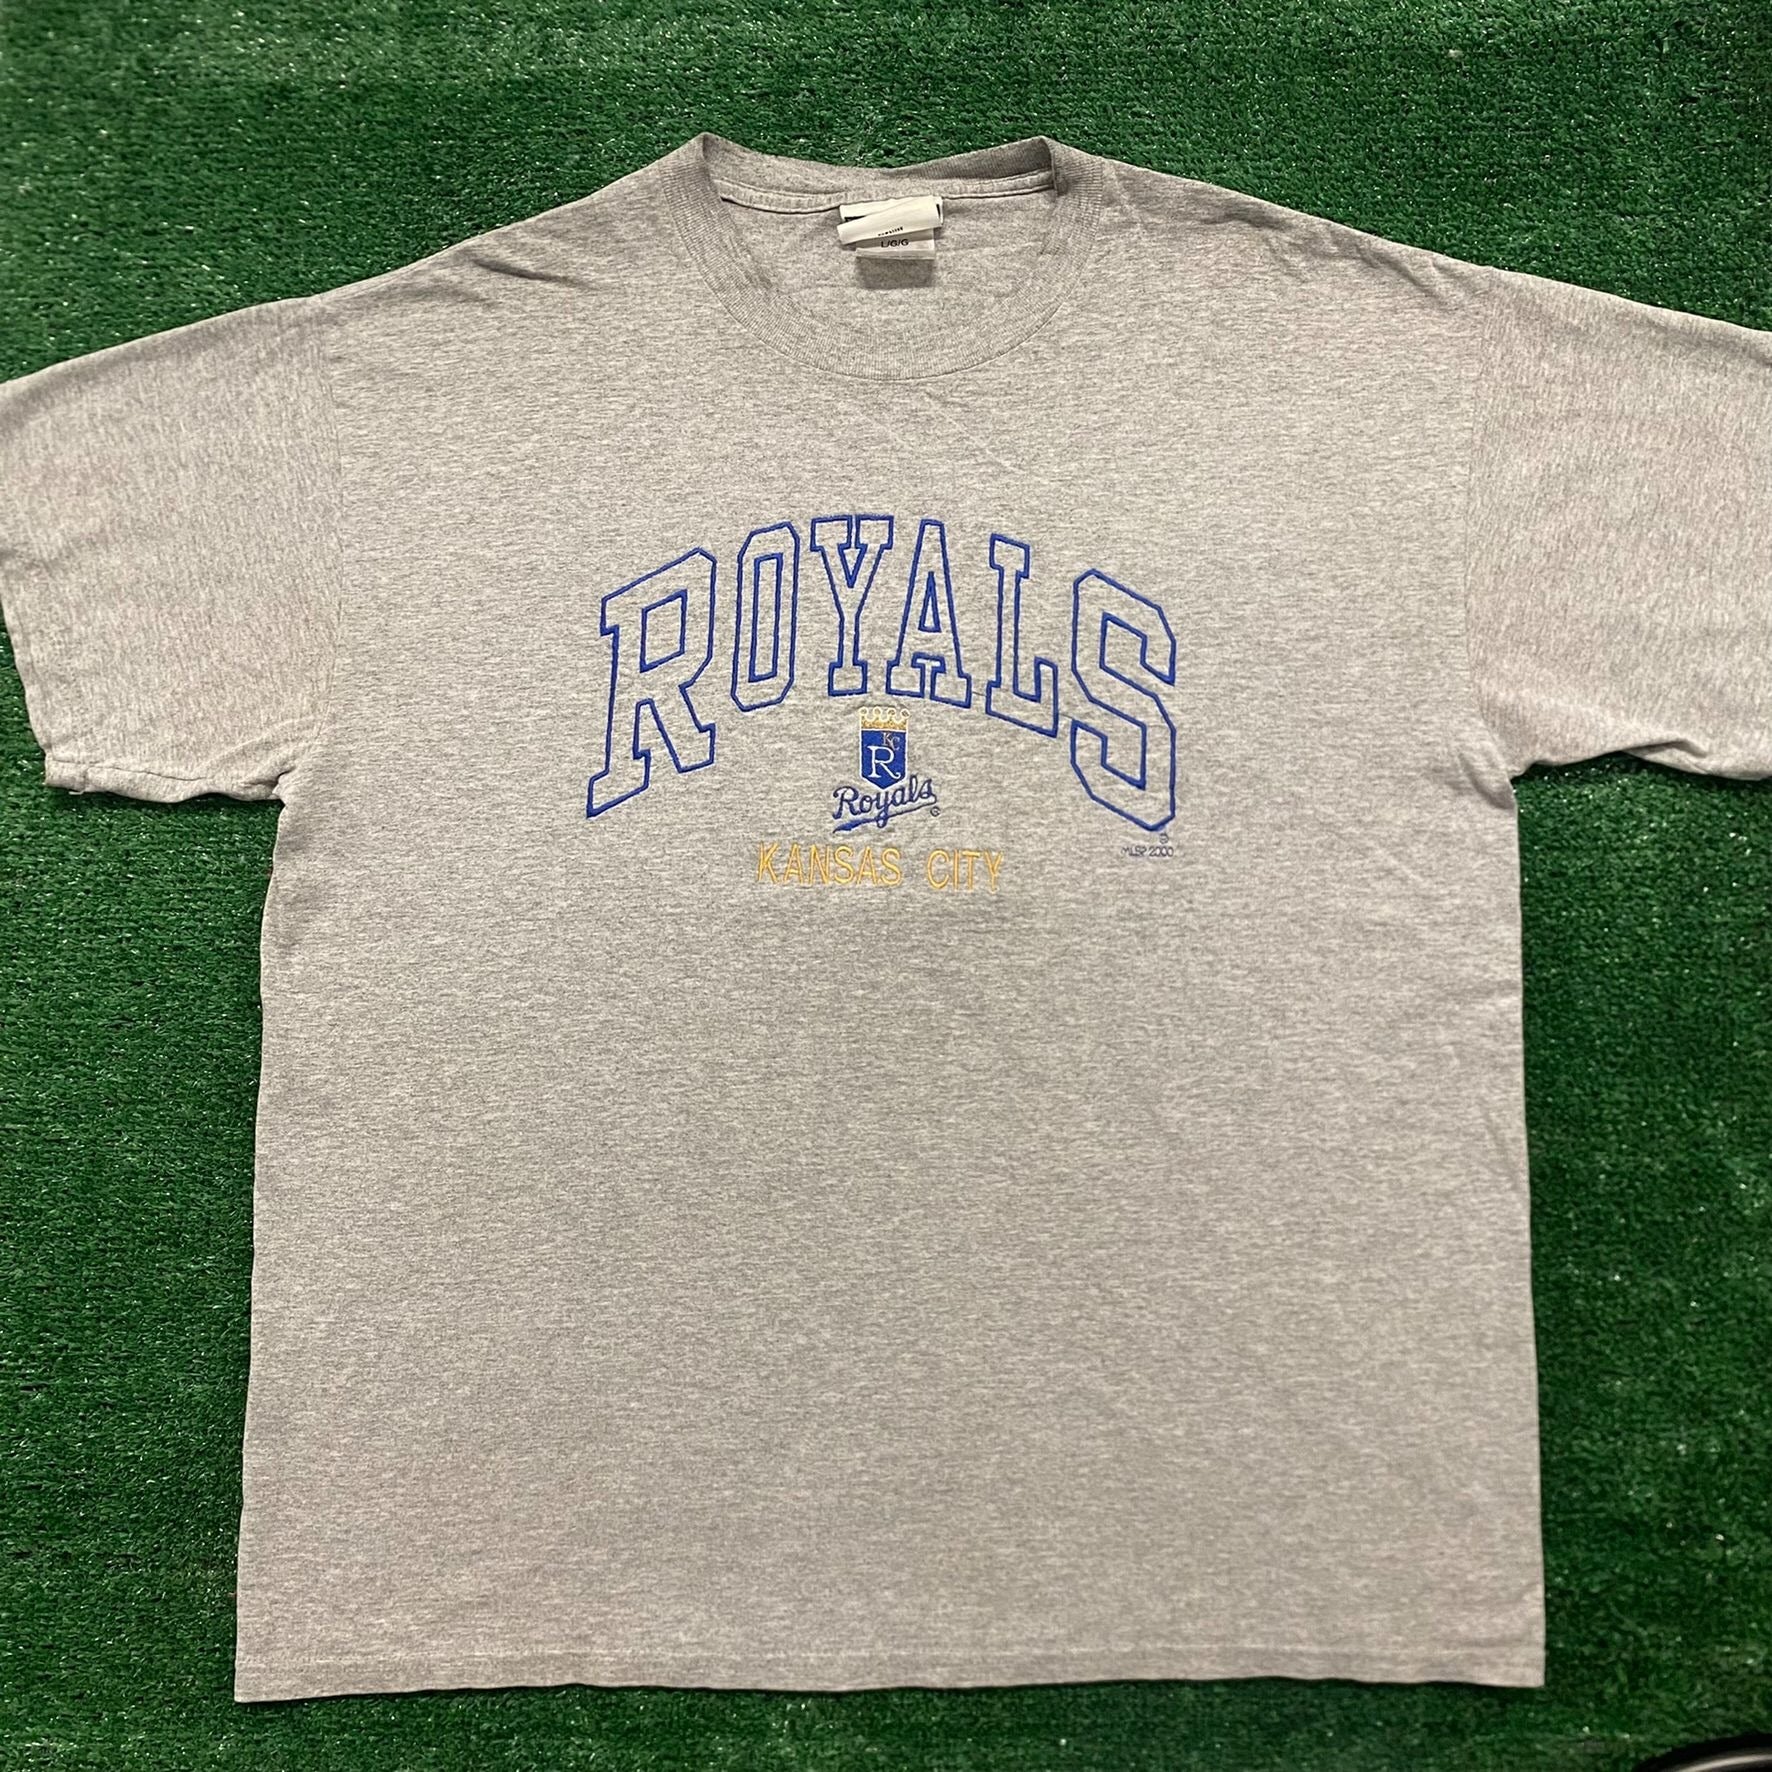 Shirts  Authentic Vintage Kc Royals 1985 World Series Champions